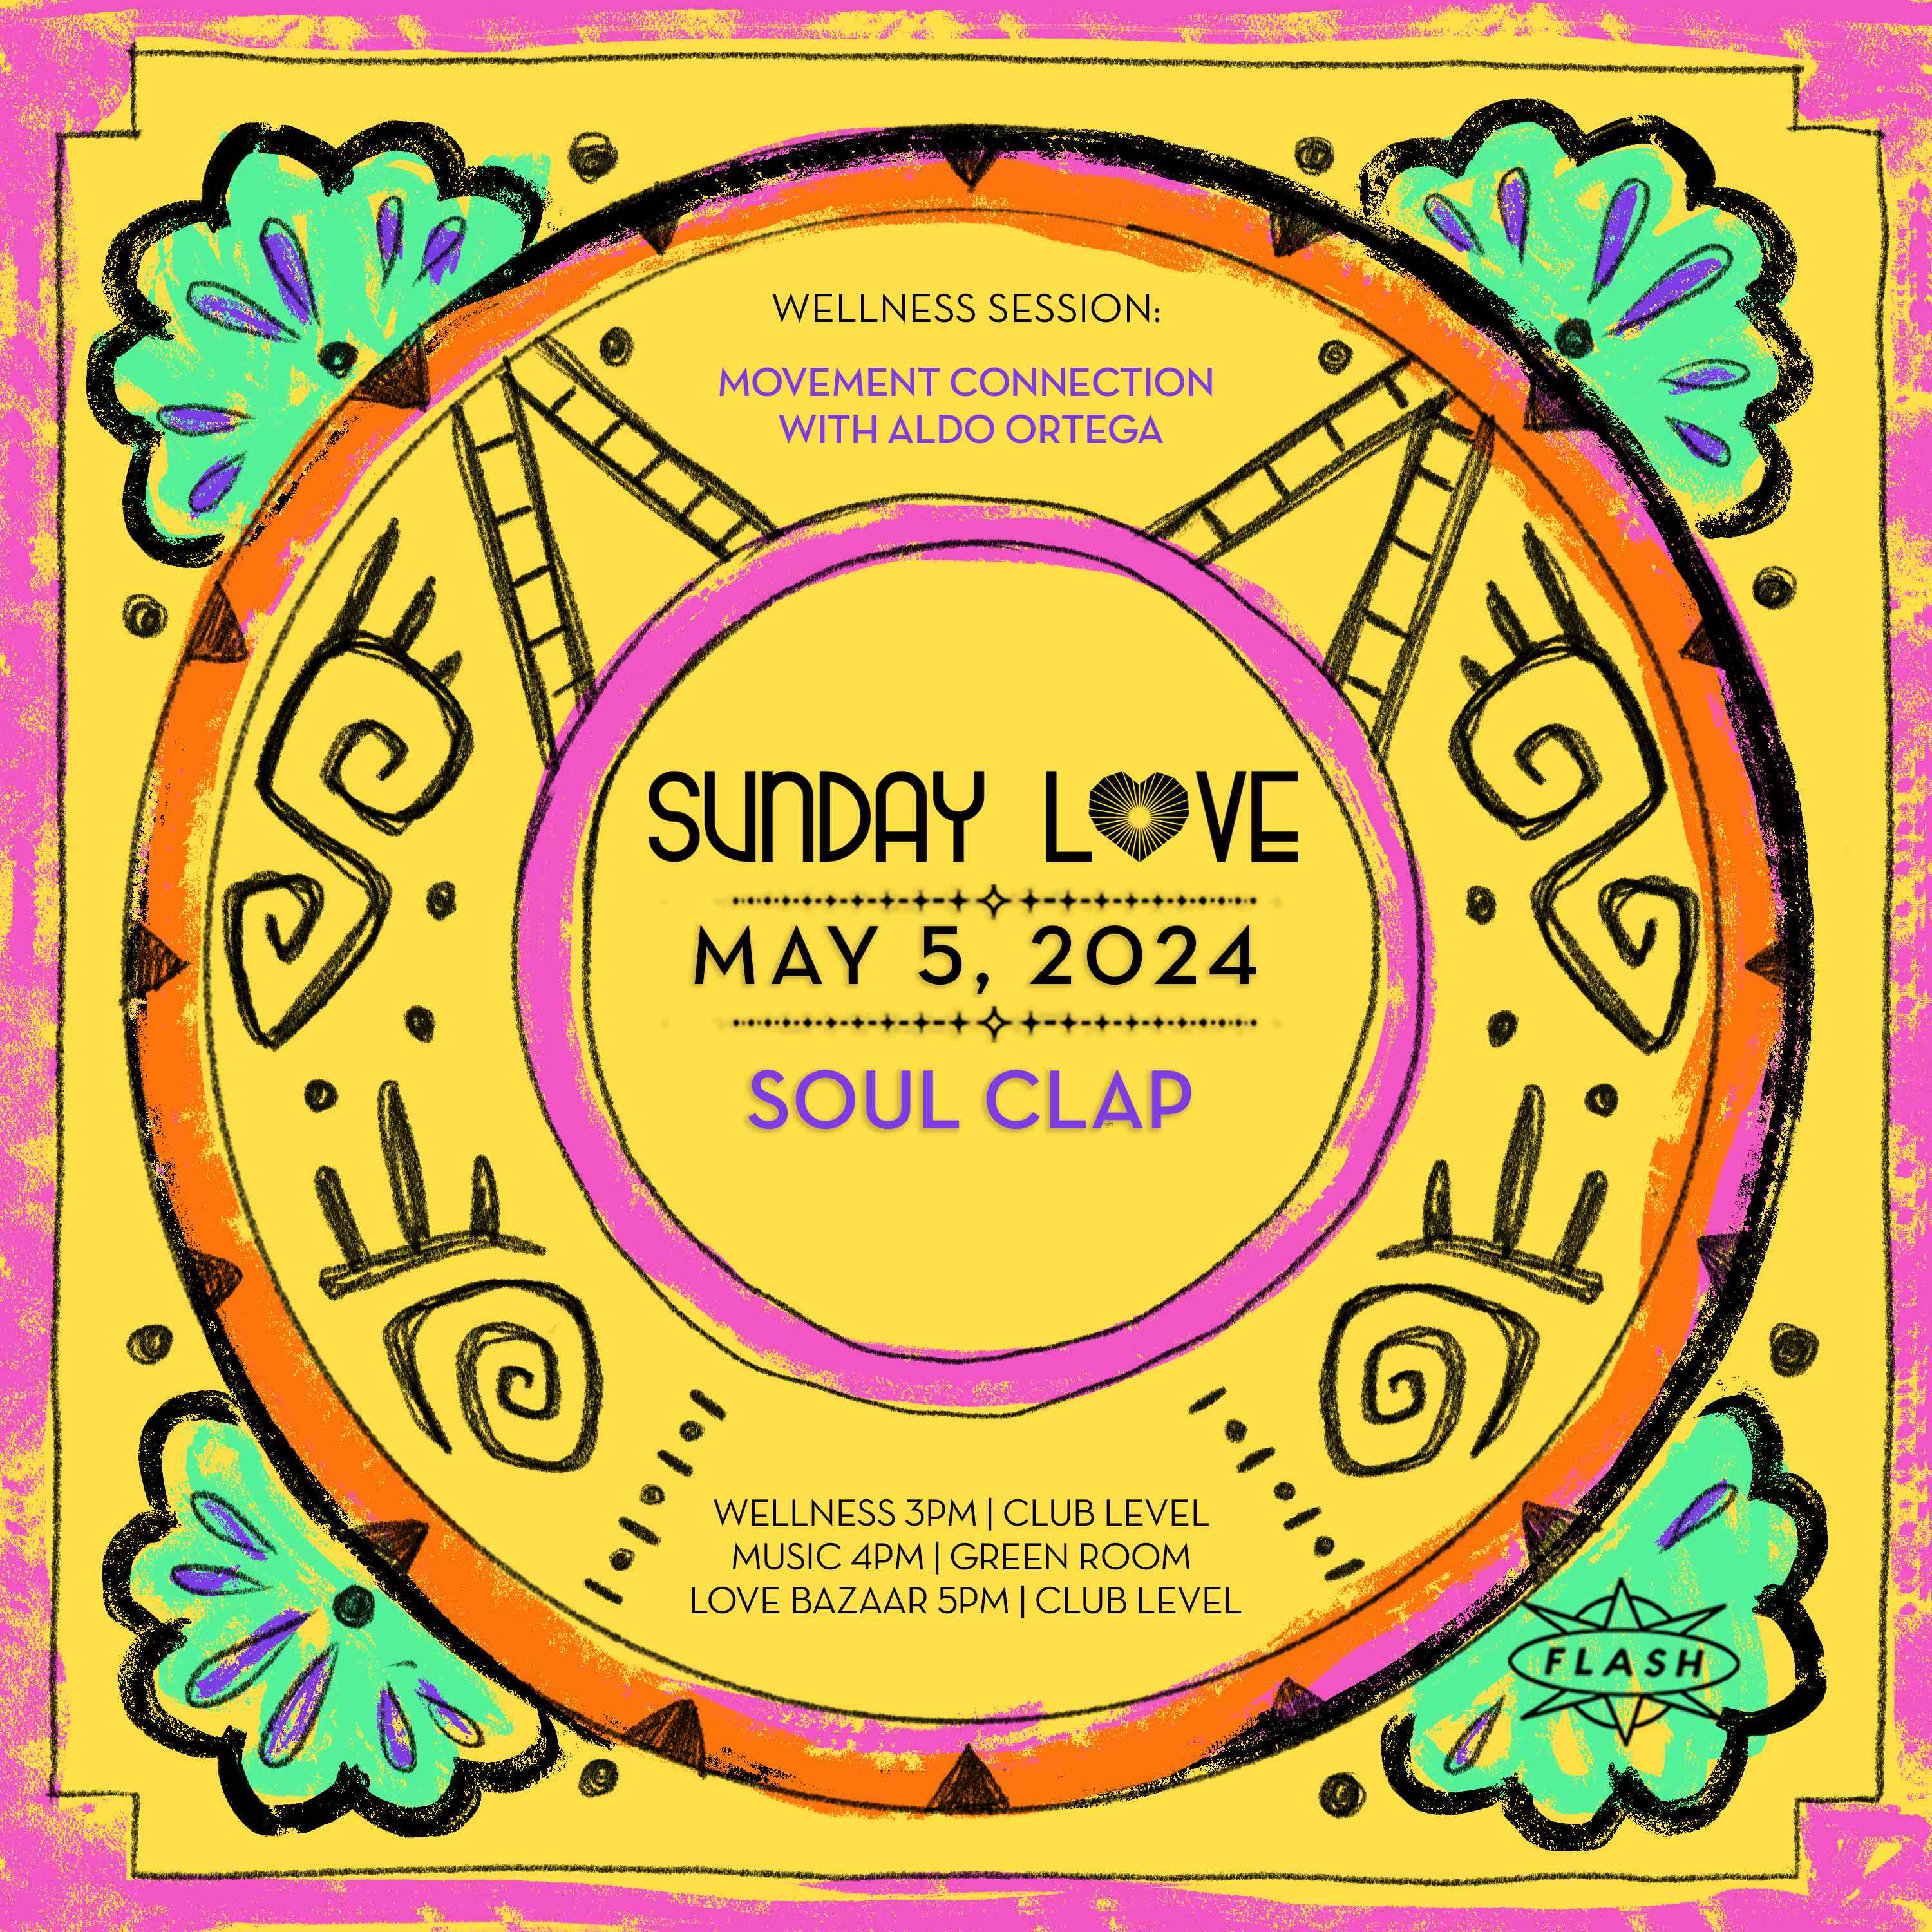 Sunday Love: Soul Clap event flyer